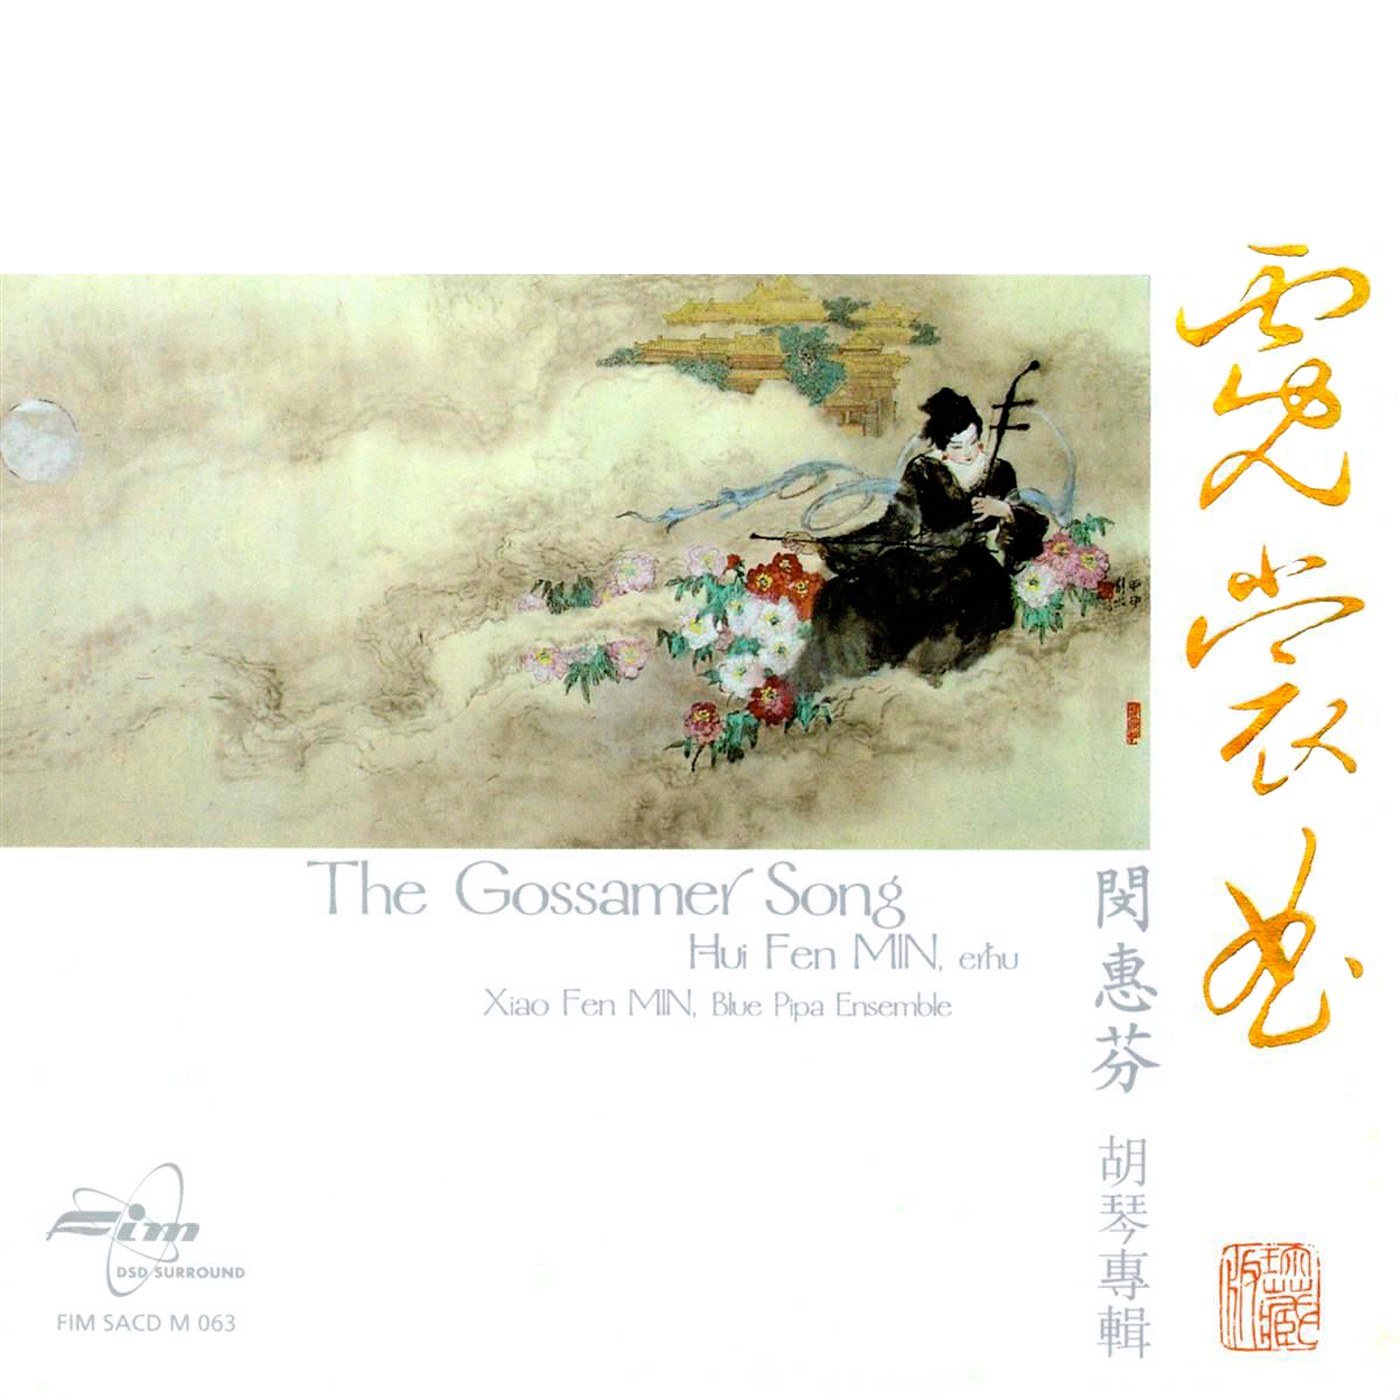 Hui Fen Min, Blue Pipa Ensemble, Xiao Fen Min – The Gossamer Song (2004) MCH SACD ISO + Hi-Res FLAC